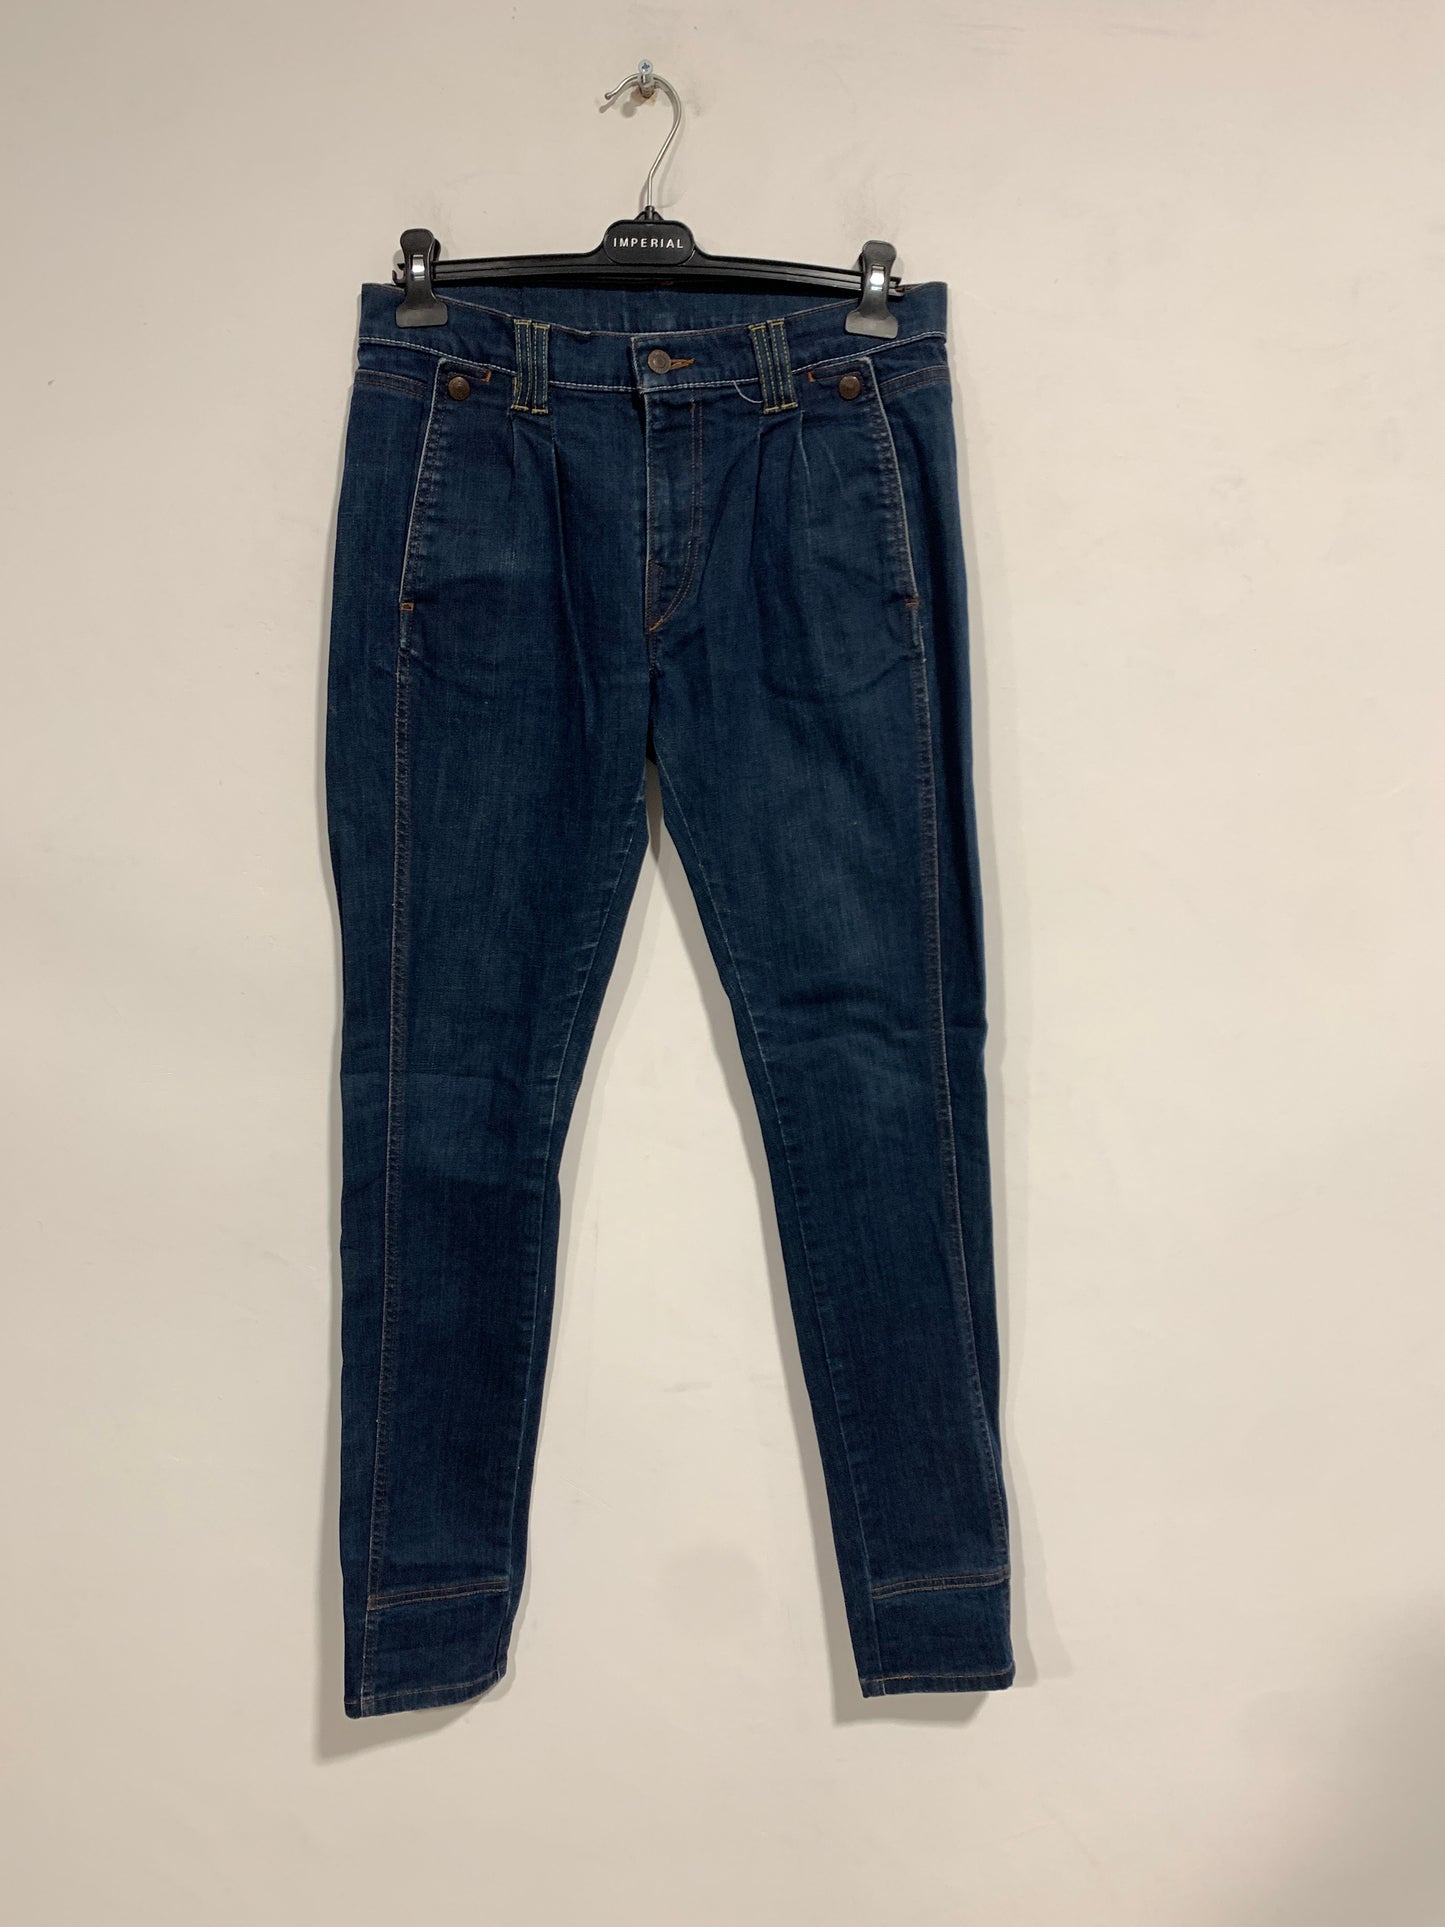 Jeans Levi's (MR367)